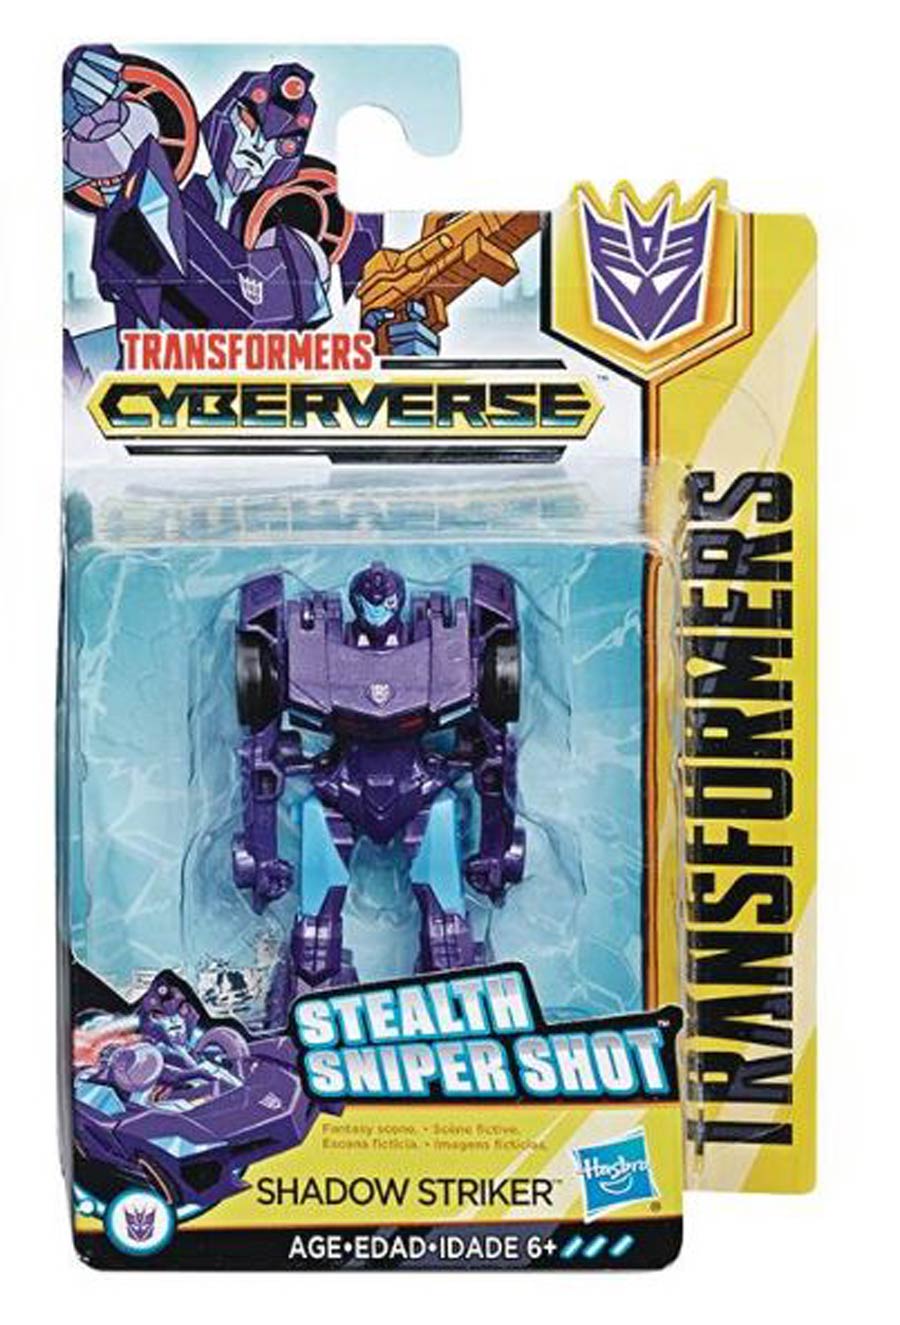 Transformers Cyberverse Scout Action Figure Assortment 201901 - Shadow Striker